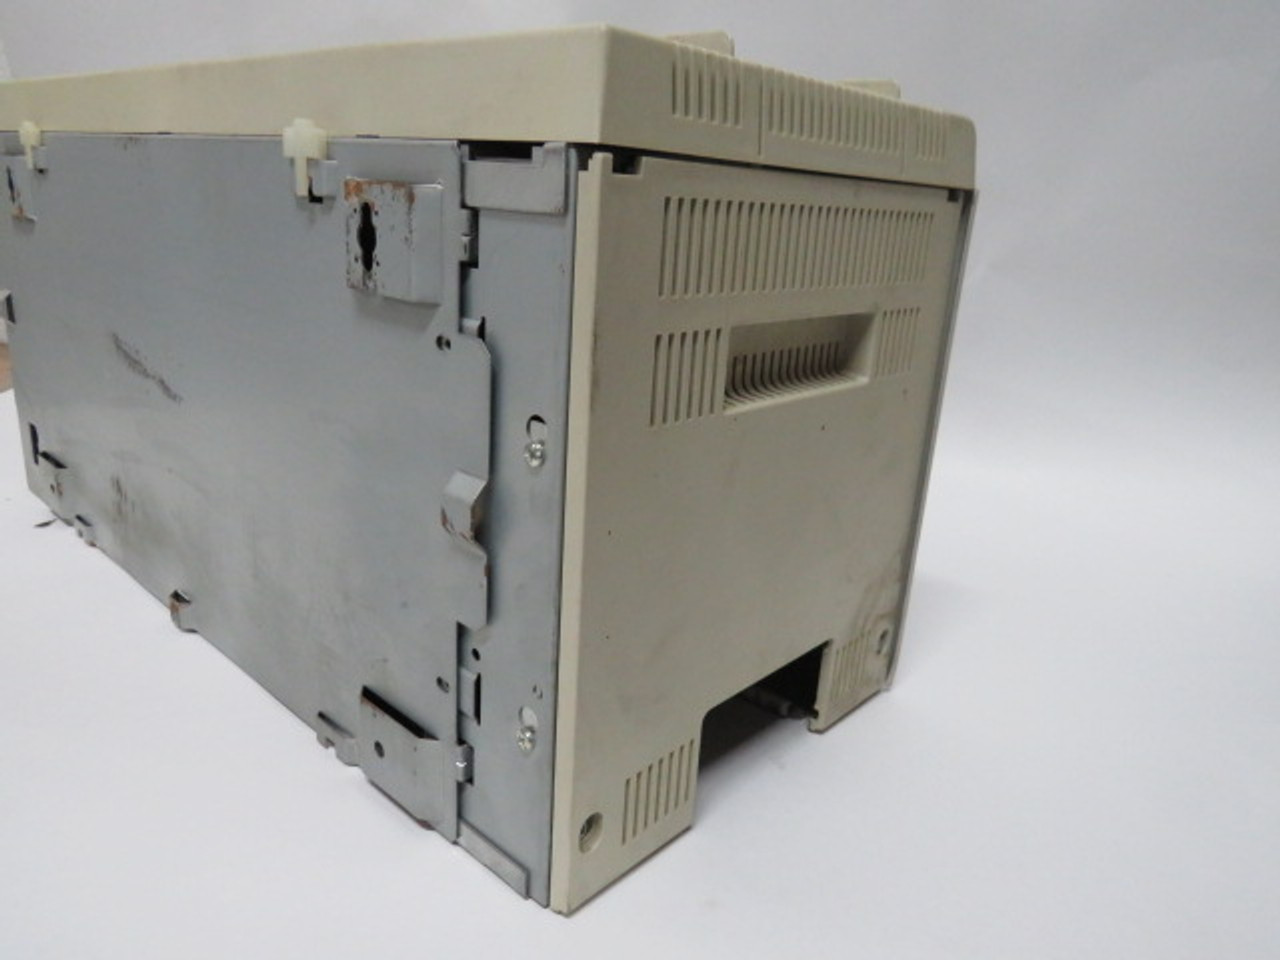 Toshiba DKSUB280A Strata DK 280 Cabinet Telephone System 120VAC 2.4A USED